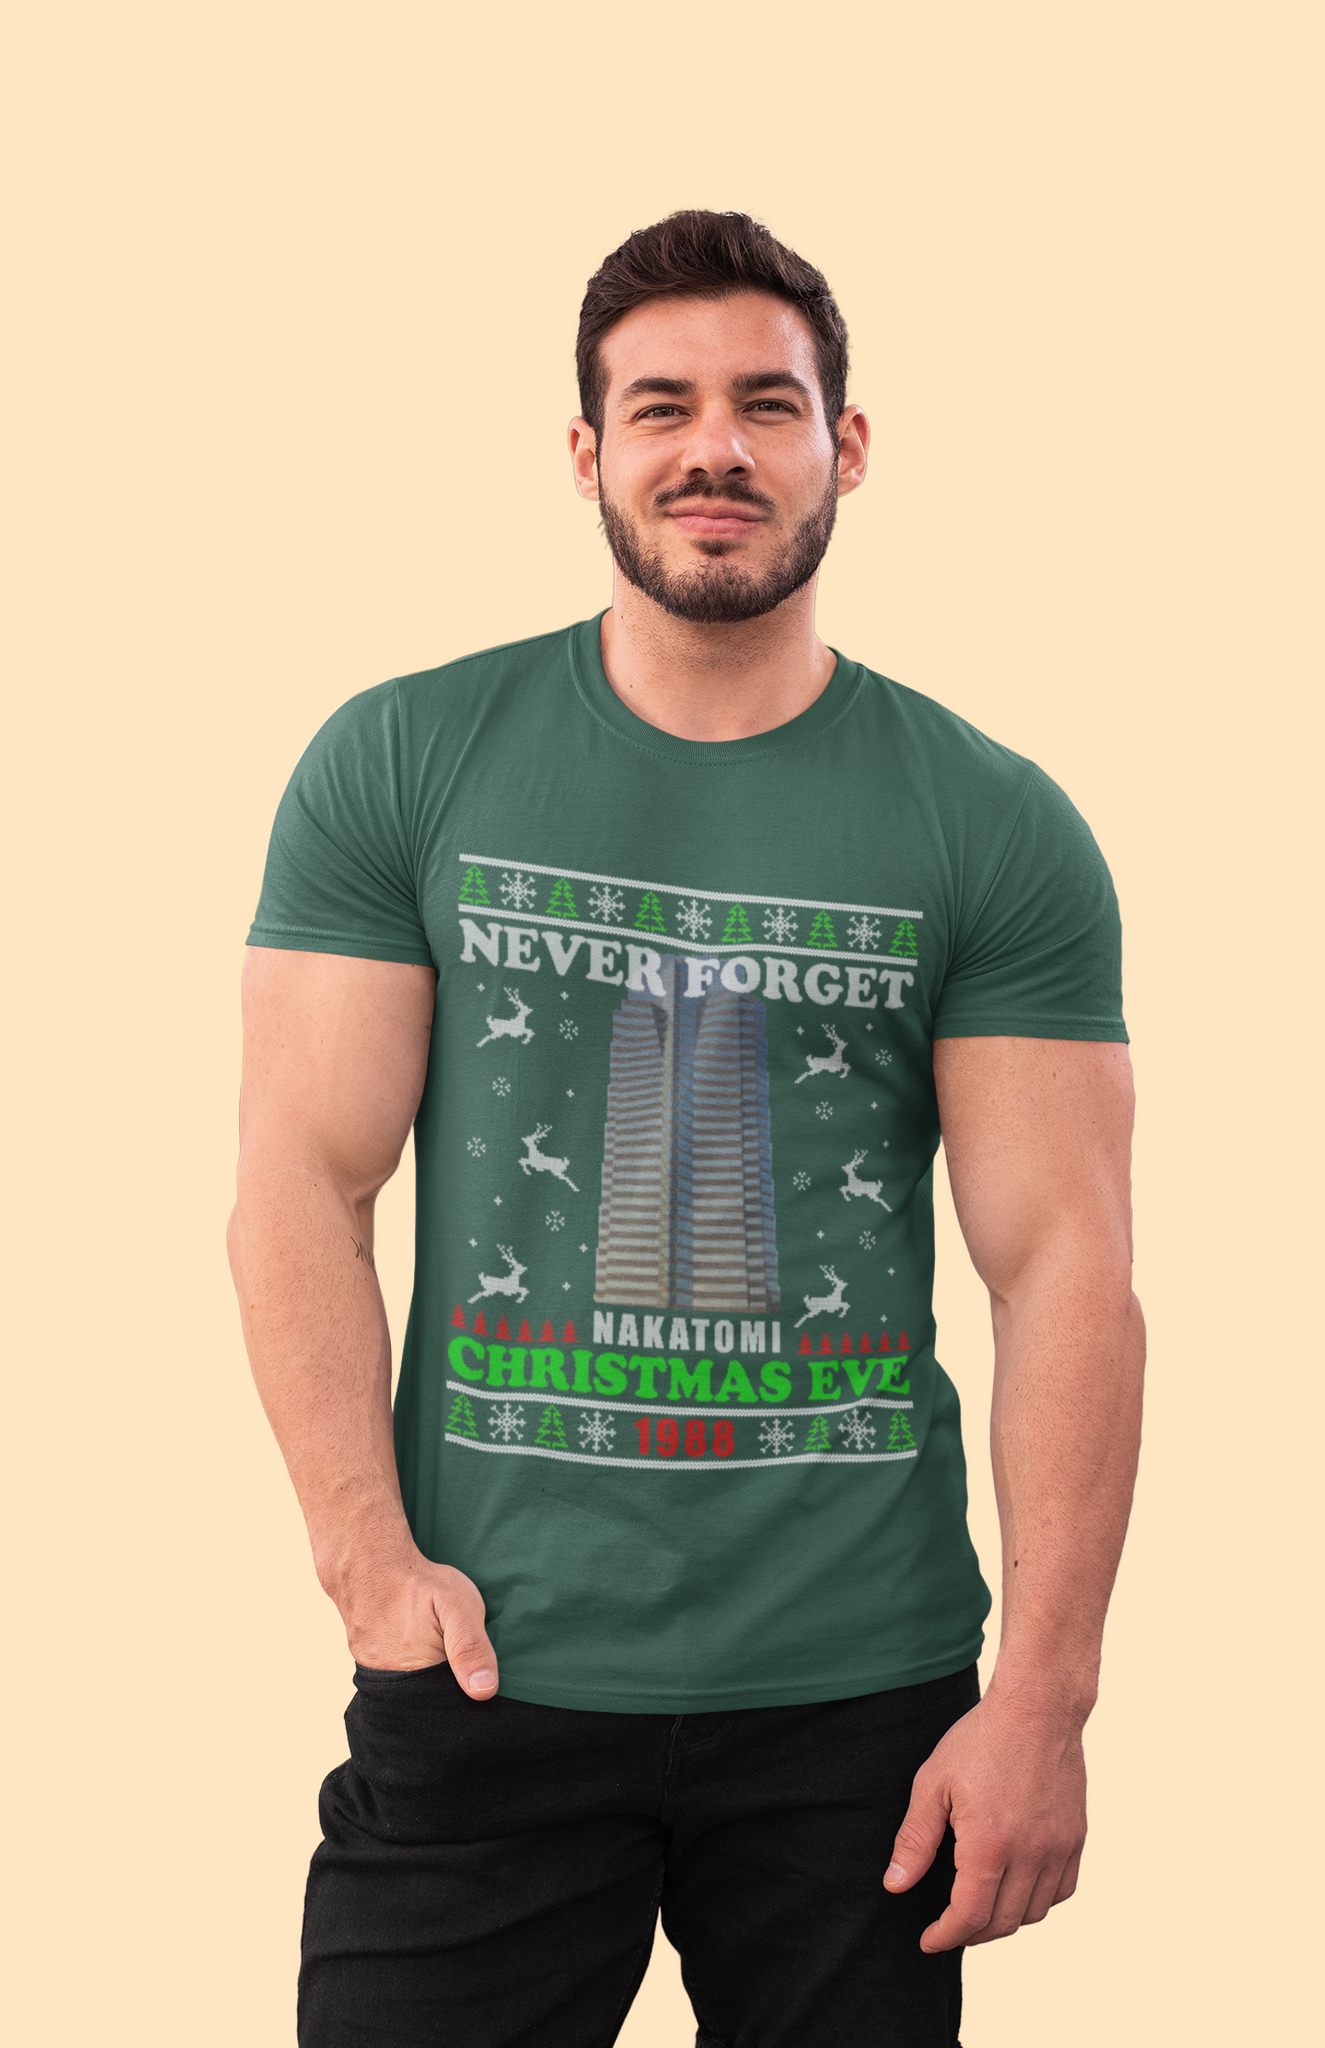 Die Hard Ugly Sweater T Shirt, Nakatomi Plaza Tshirt, Never Forget Nakatomi Plaza Christmas Eve 1988 T Shirt, Christmas Gifts